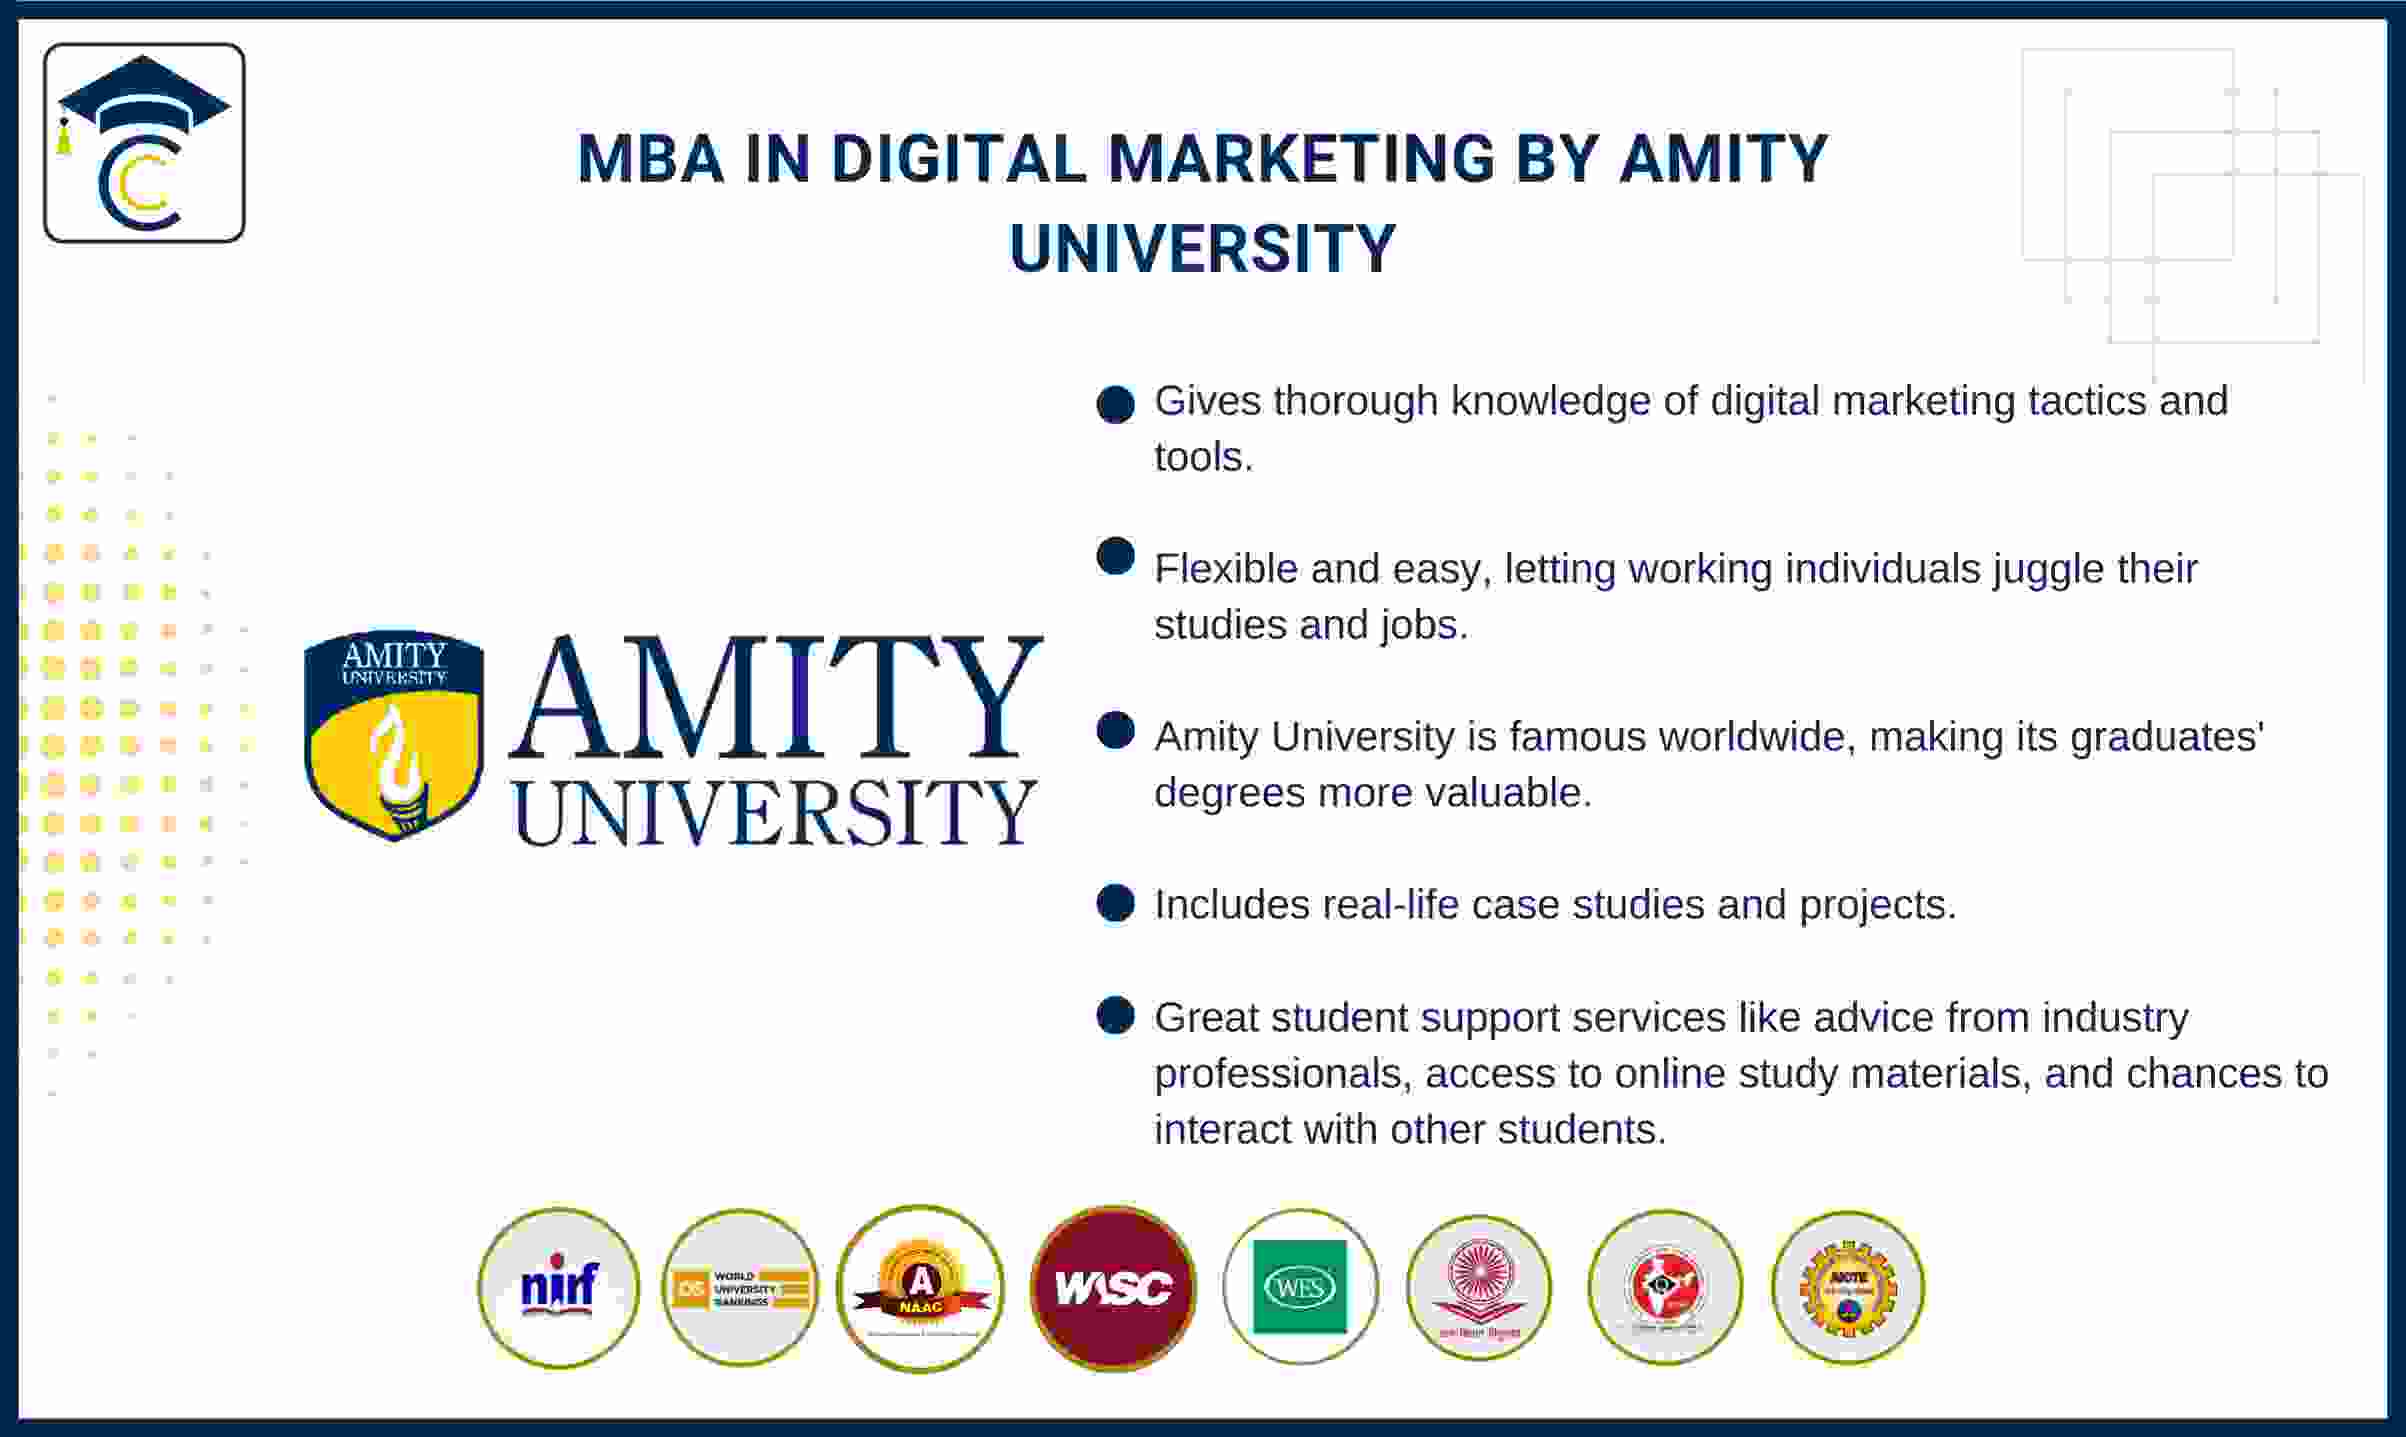 mba-in-digital-marketing-amity-university